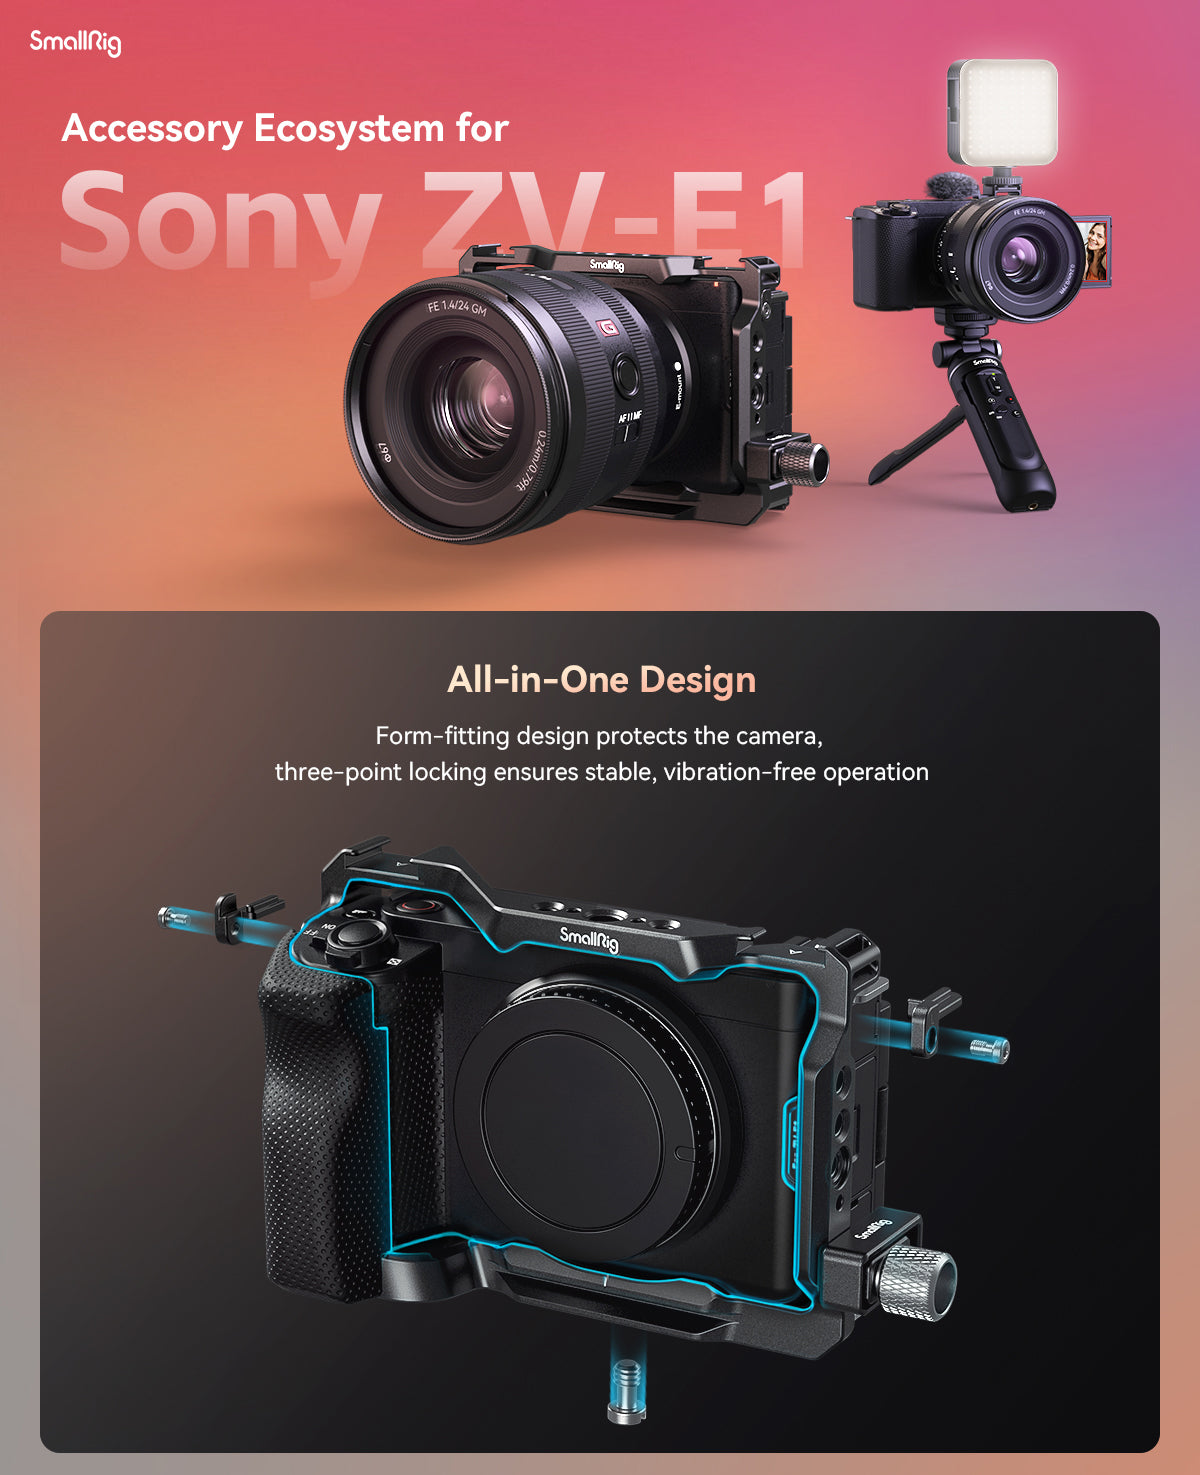 Full Camera Cage for Sony ZV-E1